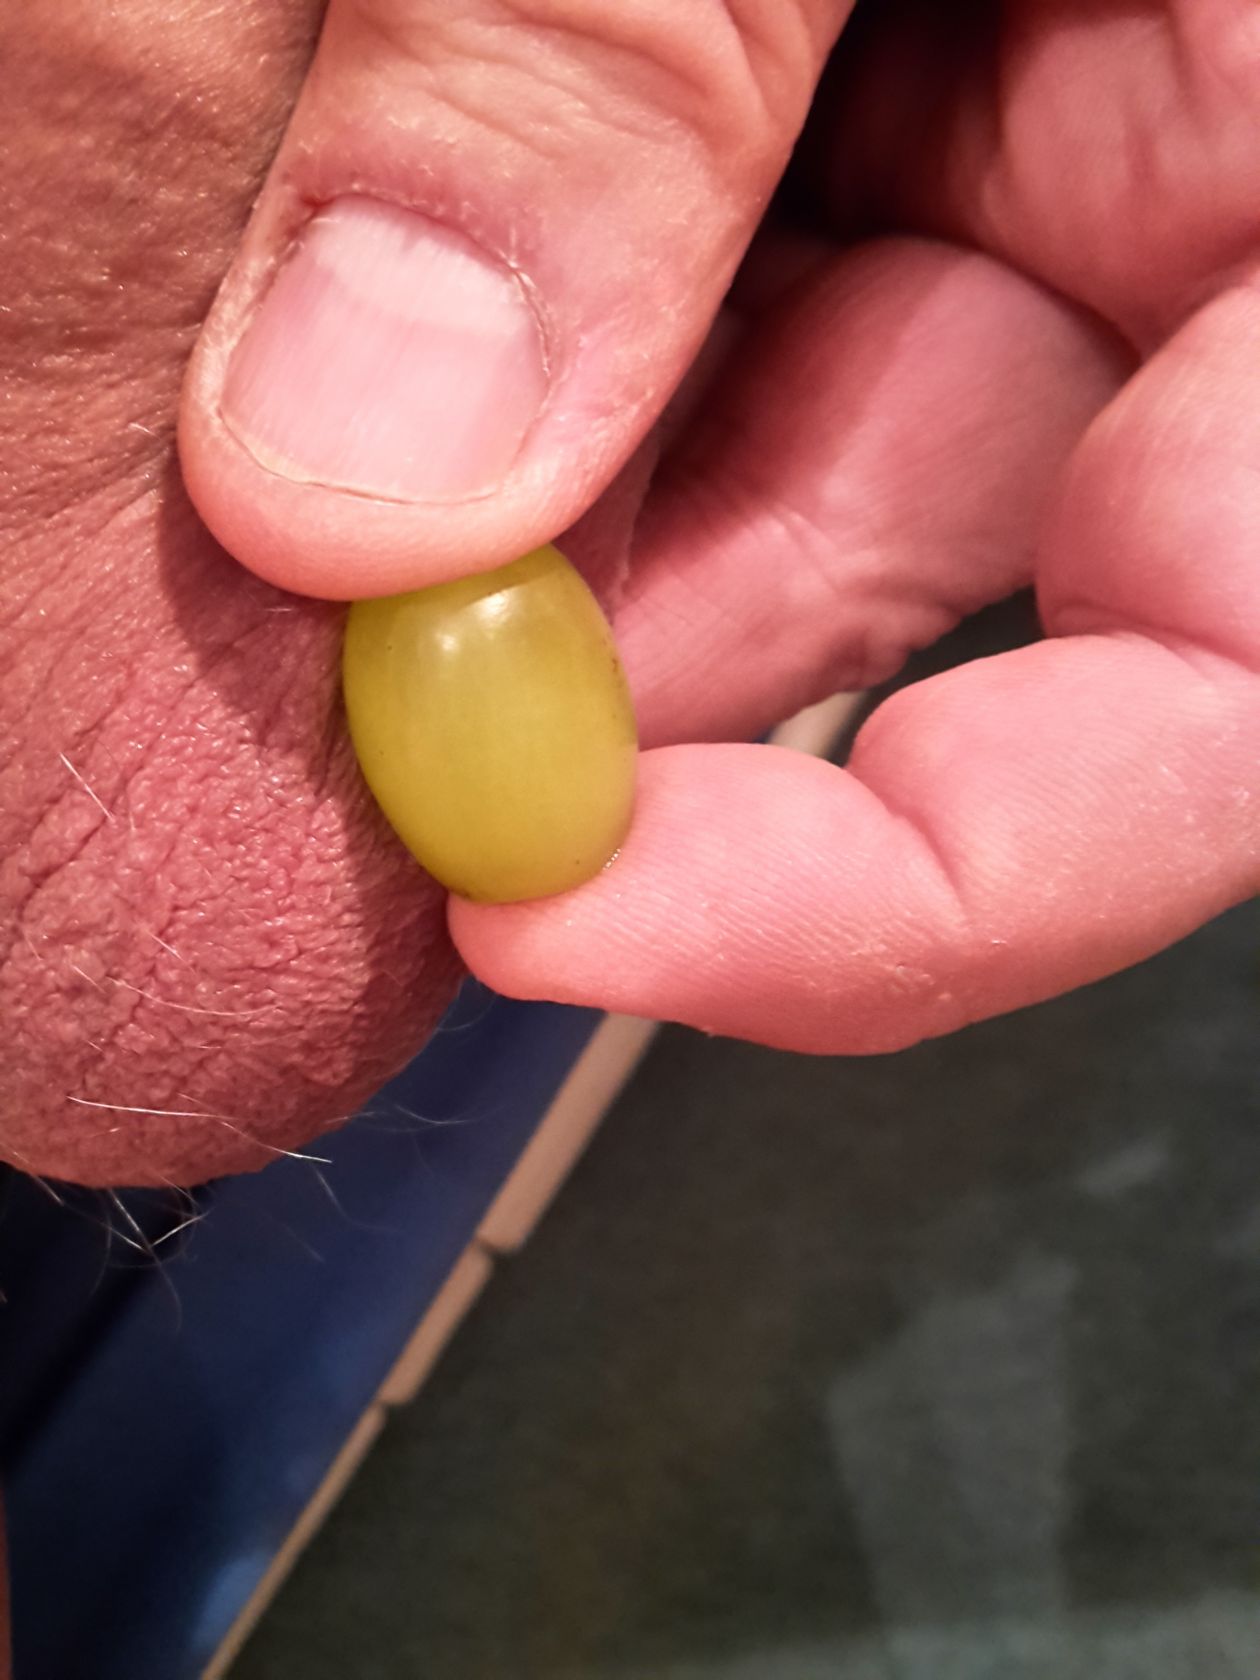 Grape sized testicles